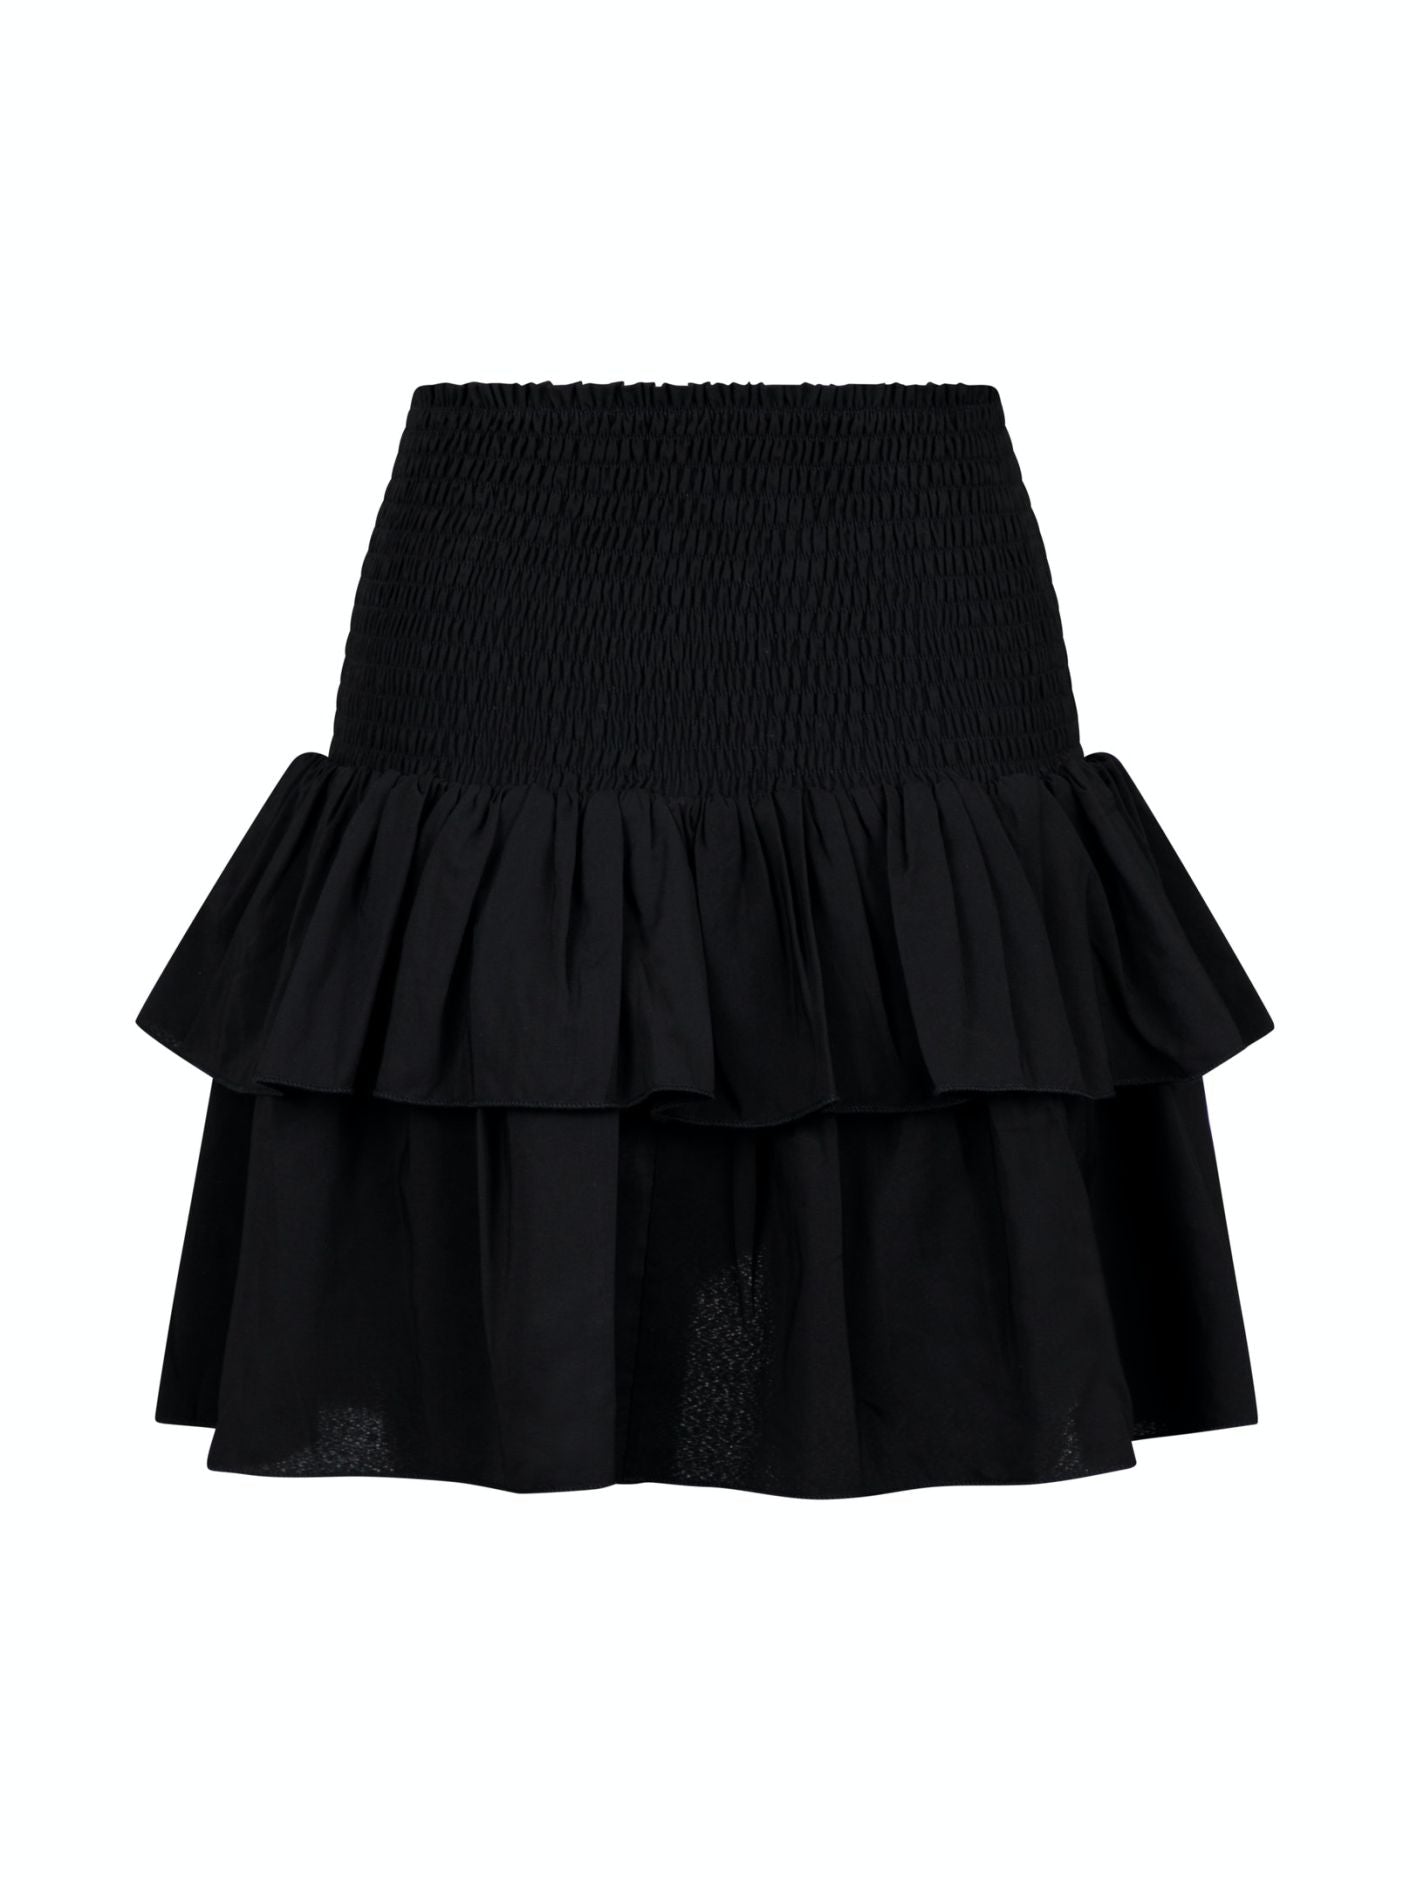 Carin R Skirt Black